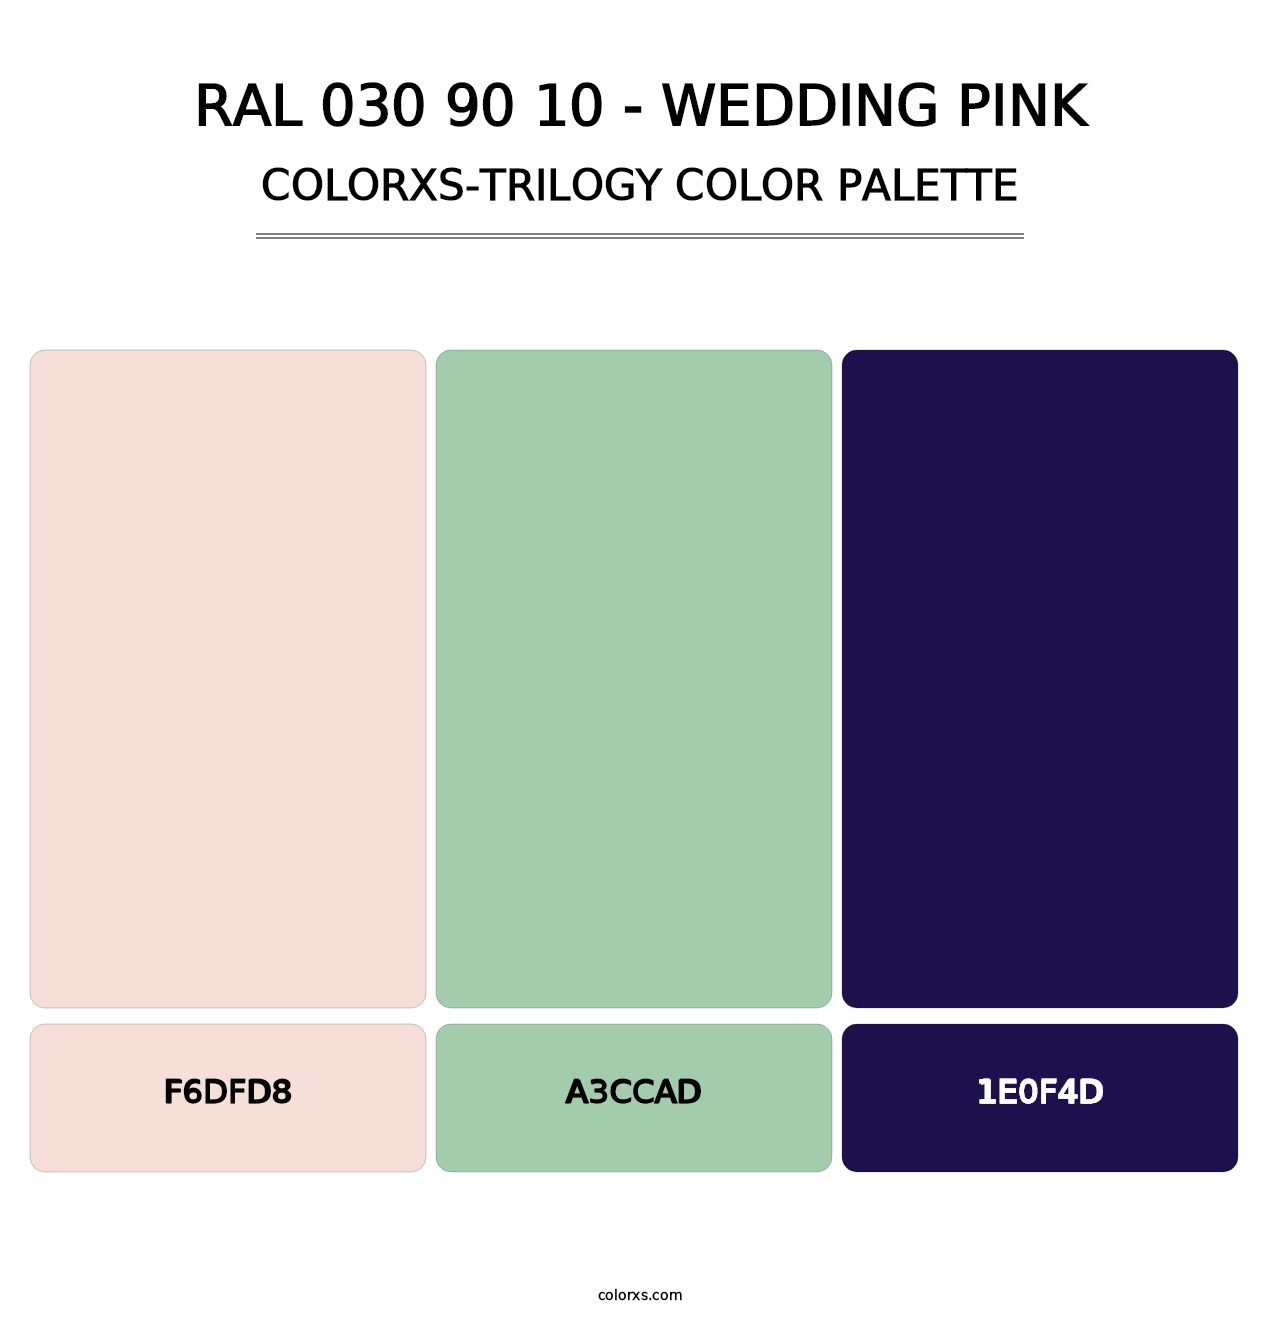 RAL 030 90 10 - Wedding Pink - Colorxs Trilogy Palette